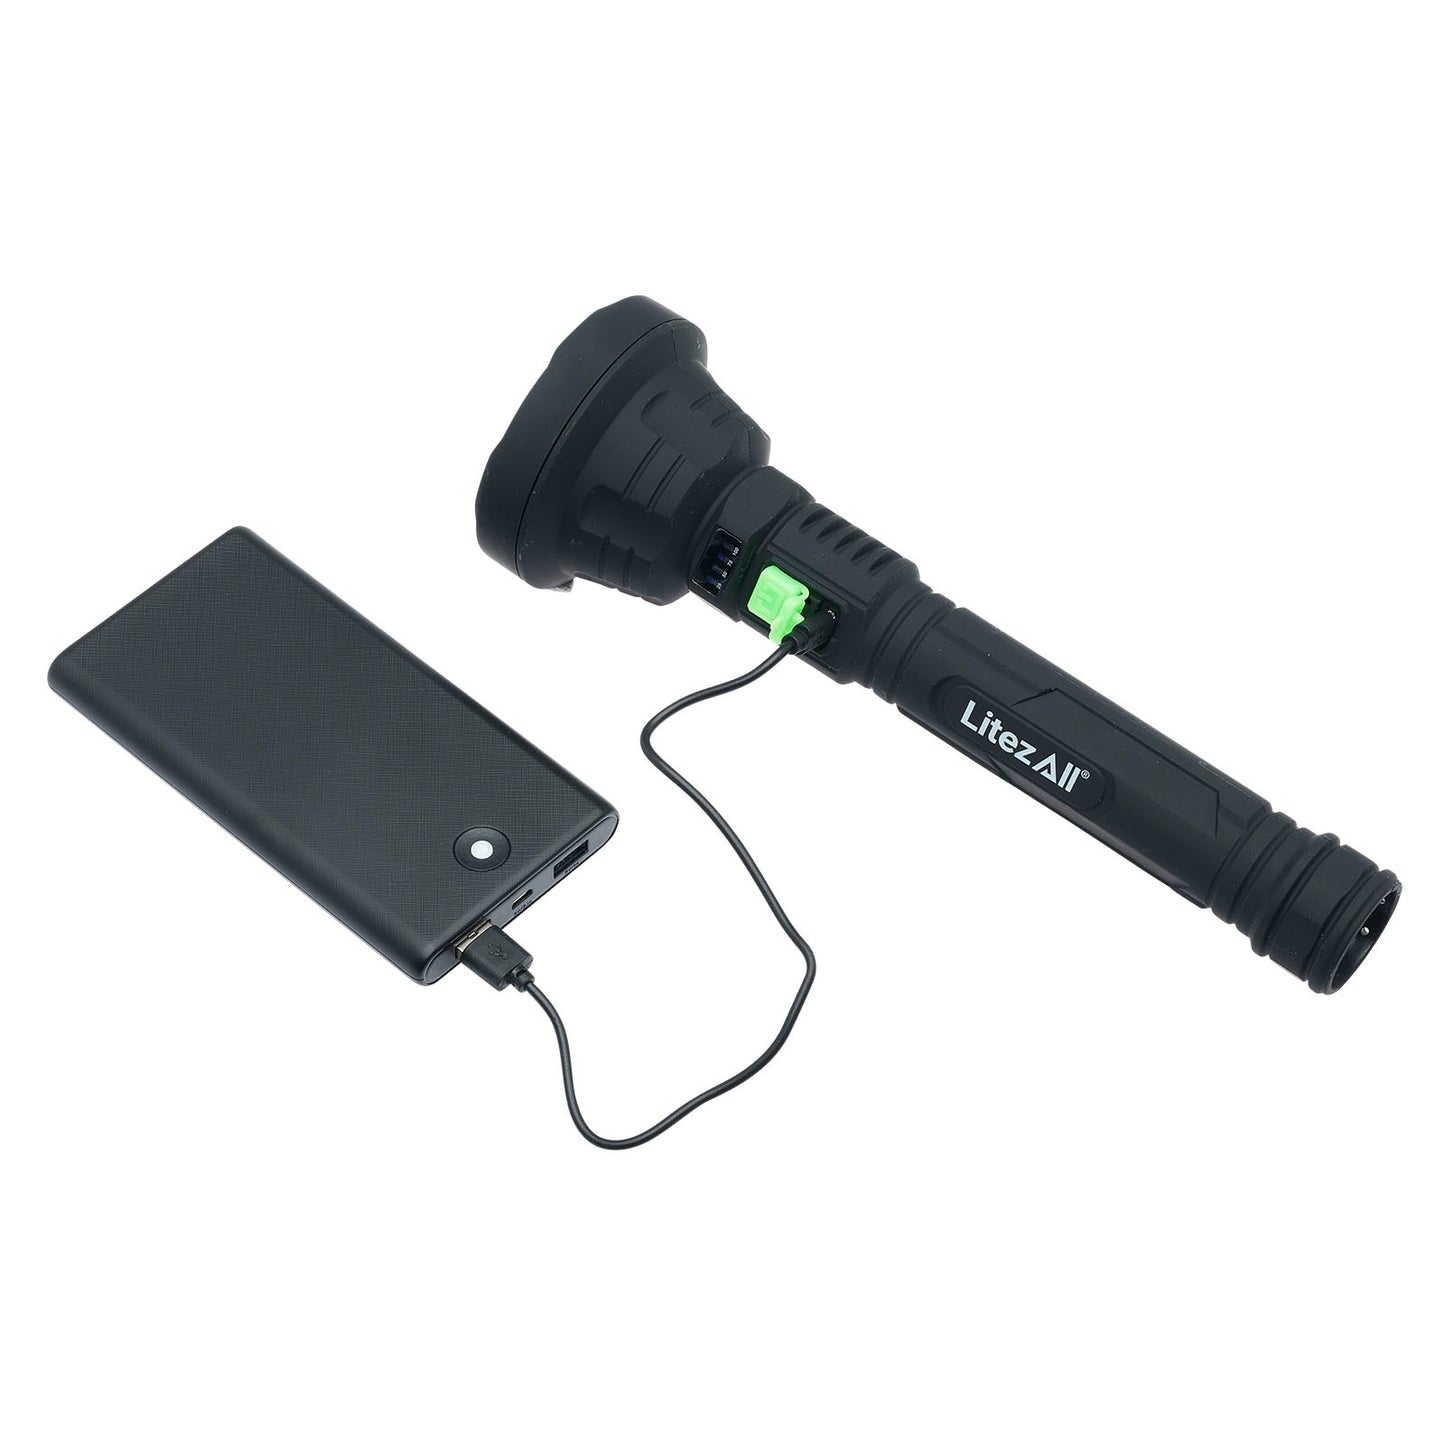 LitezAll 27625 Rechargeable Flashlight/Head Torch Triple Pack